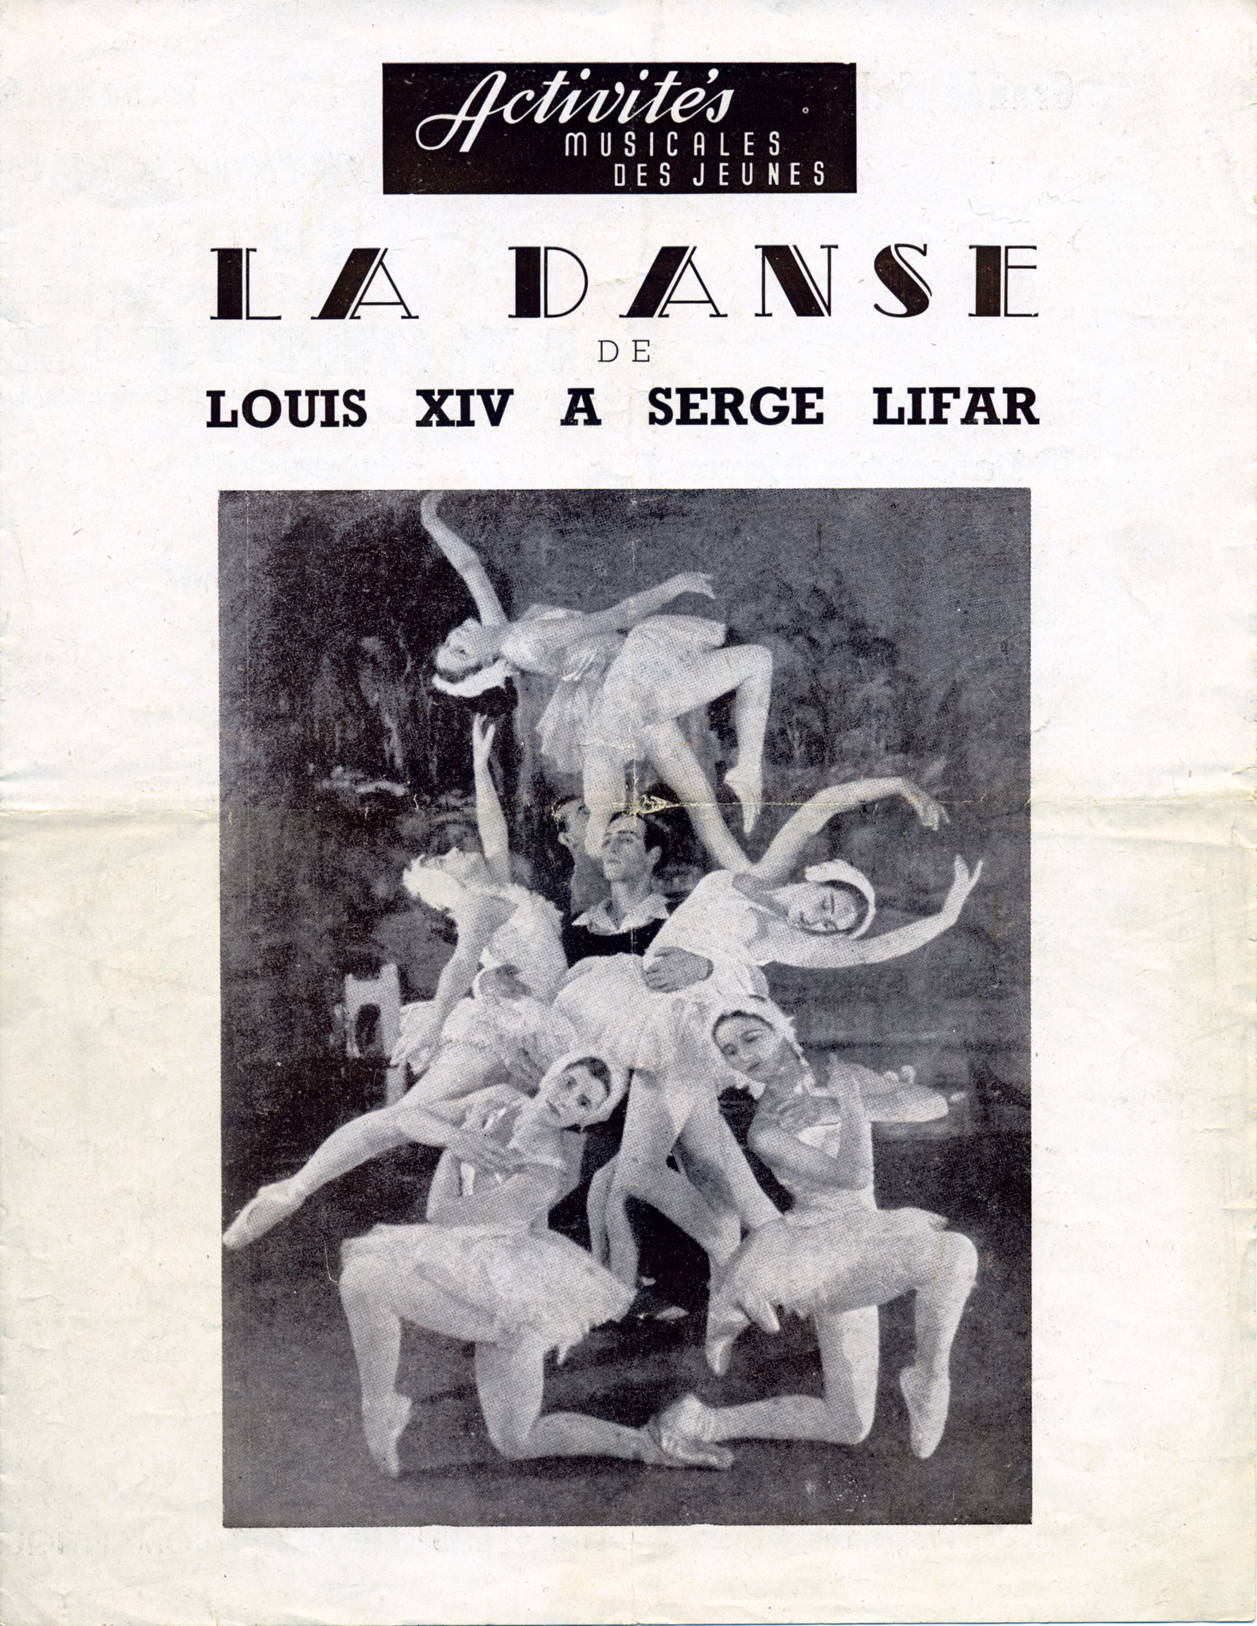 Programme "La danse de Louis XIV à Serge Lifar", 12 février 1955, p. 1-4